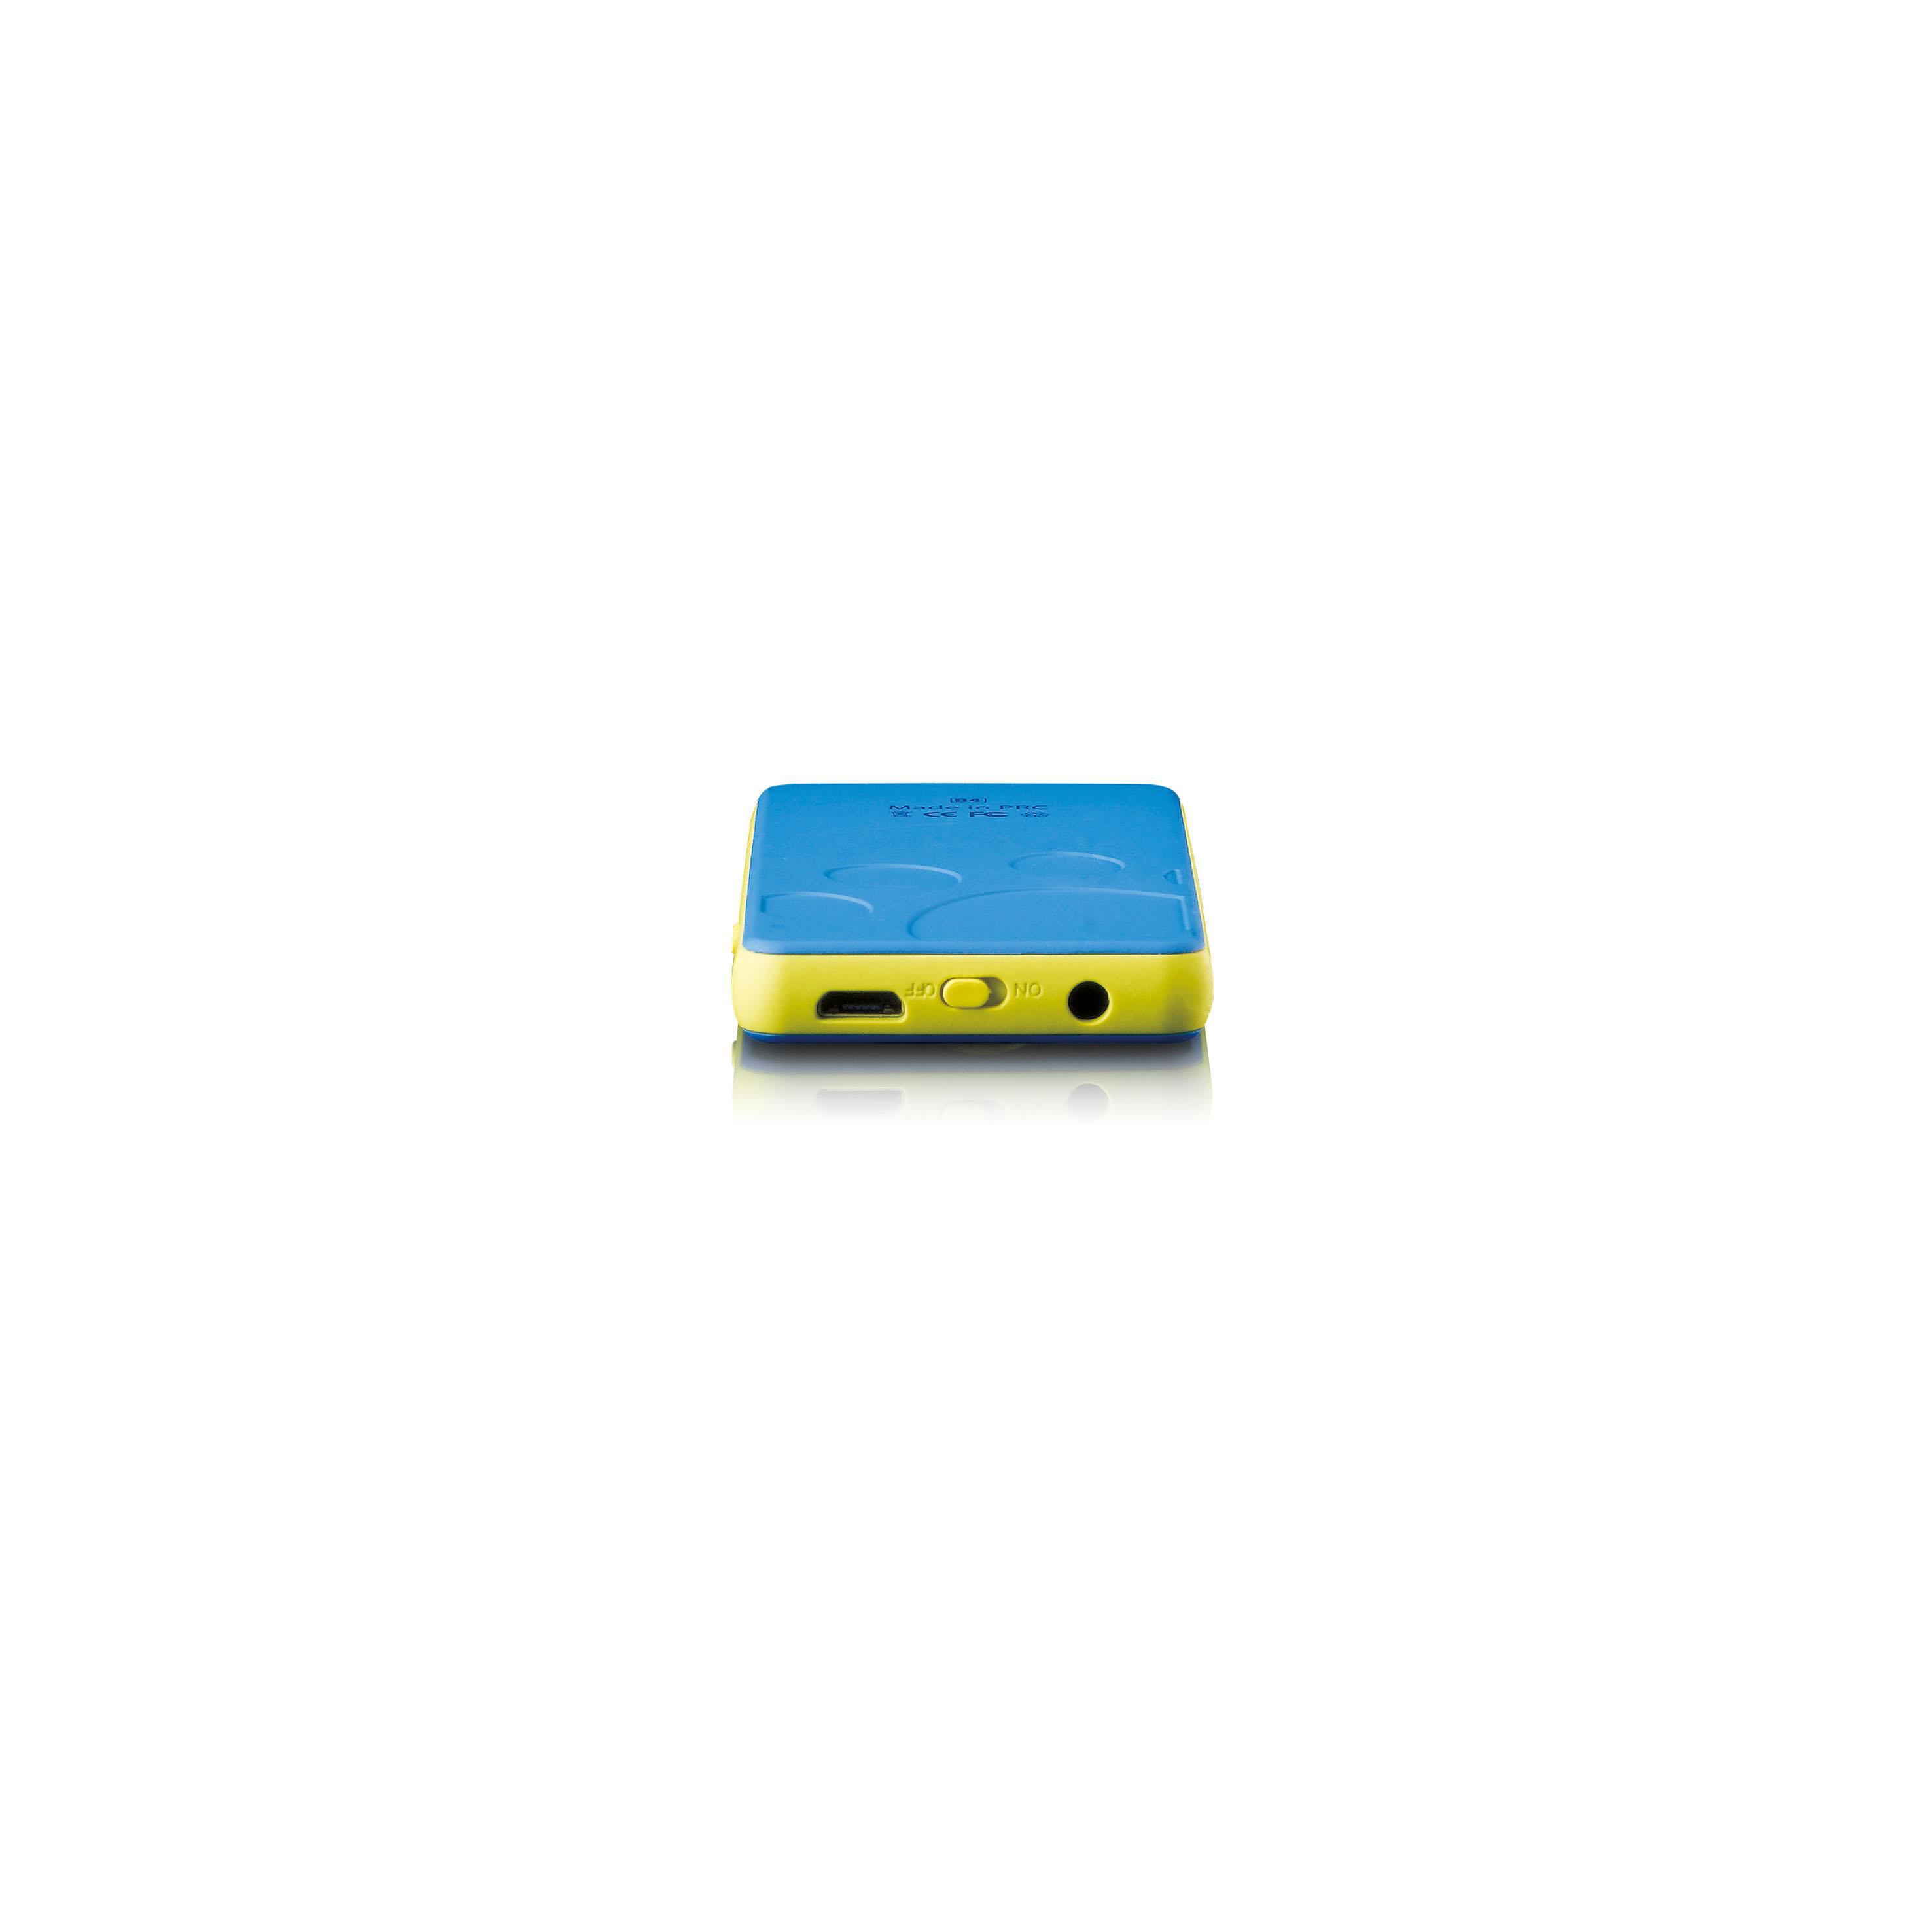 Player LENCO GB, 8 Xemio-560 MP3 Blau